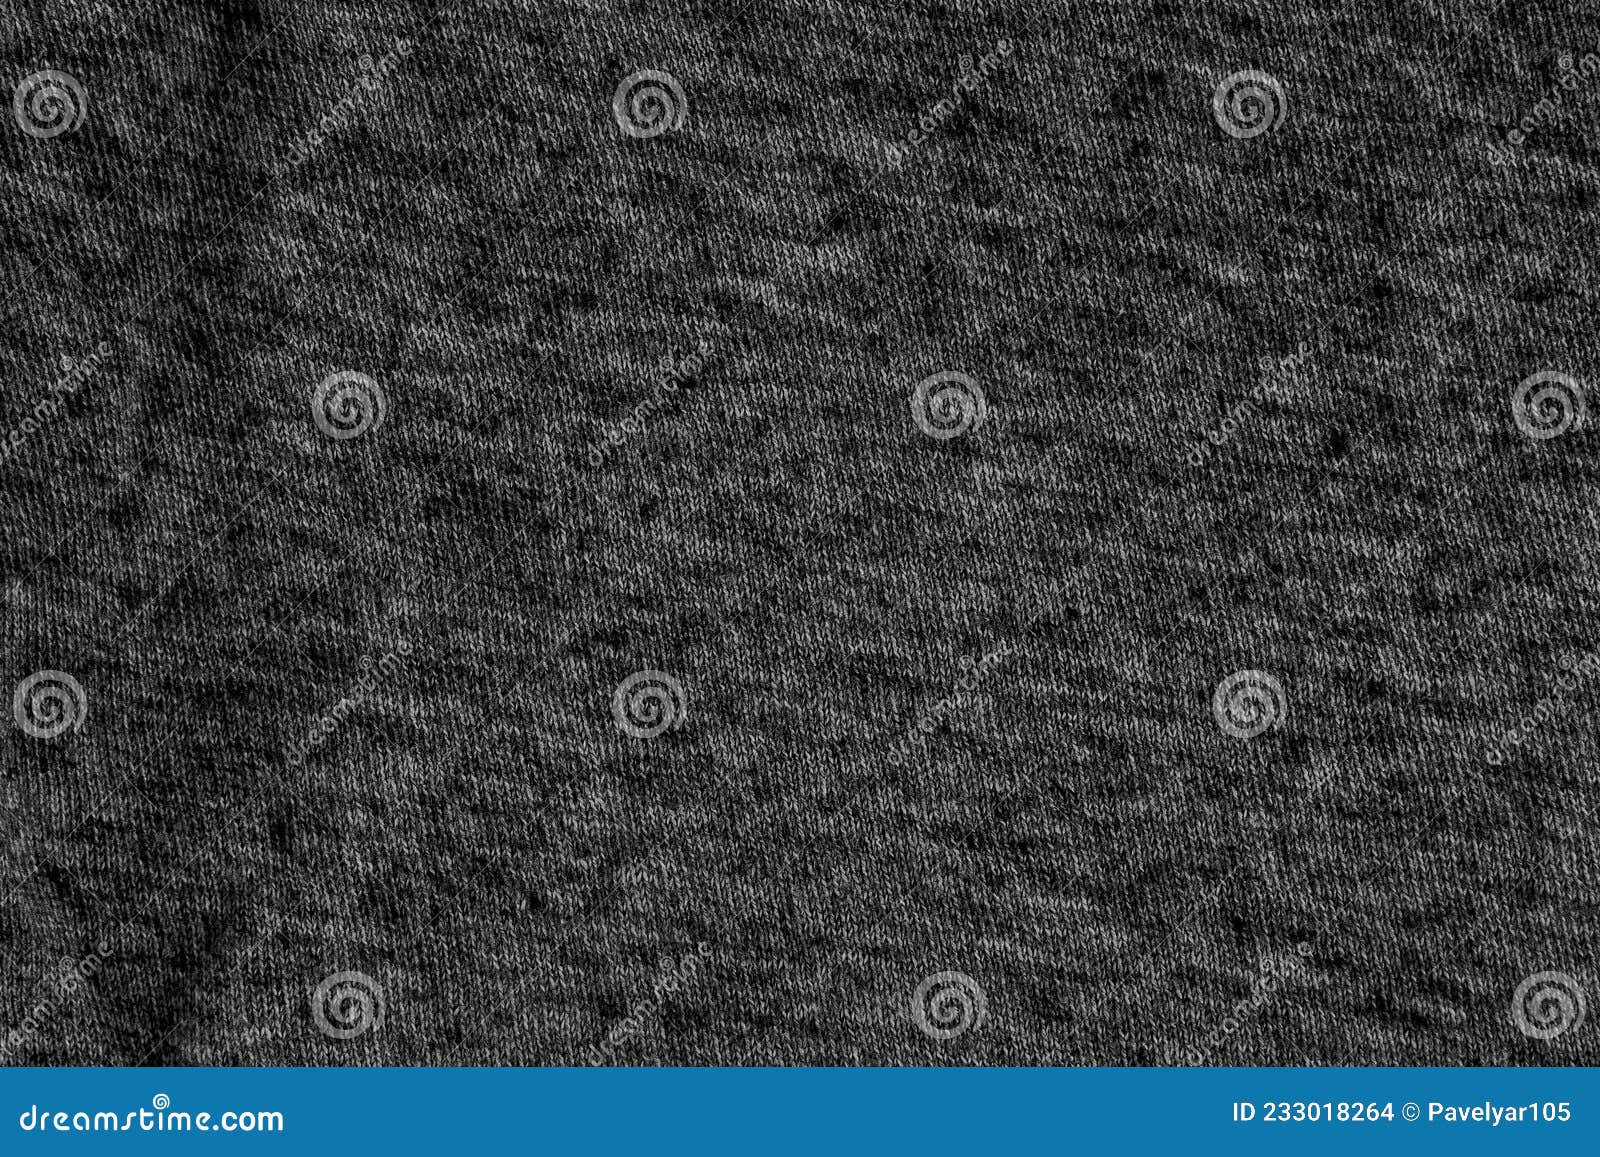 Dark Gray Fabric Texture. Woven Fiber Stock Photo - Image of backdrop ...